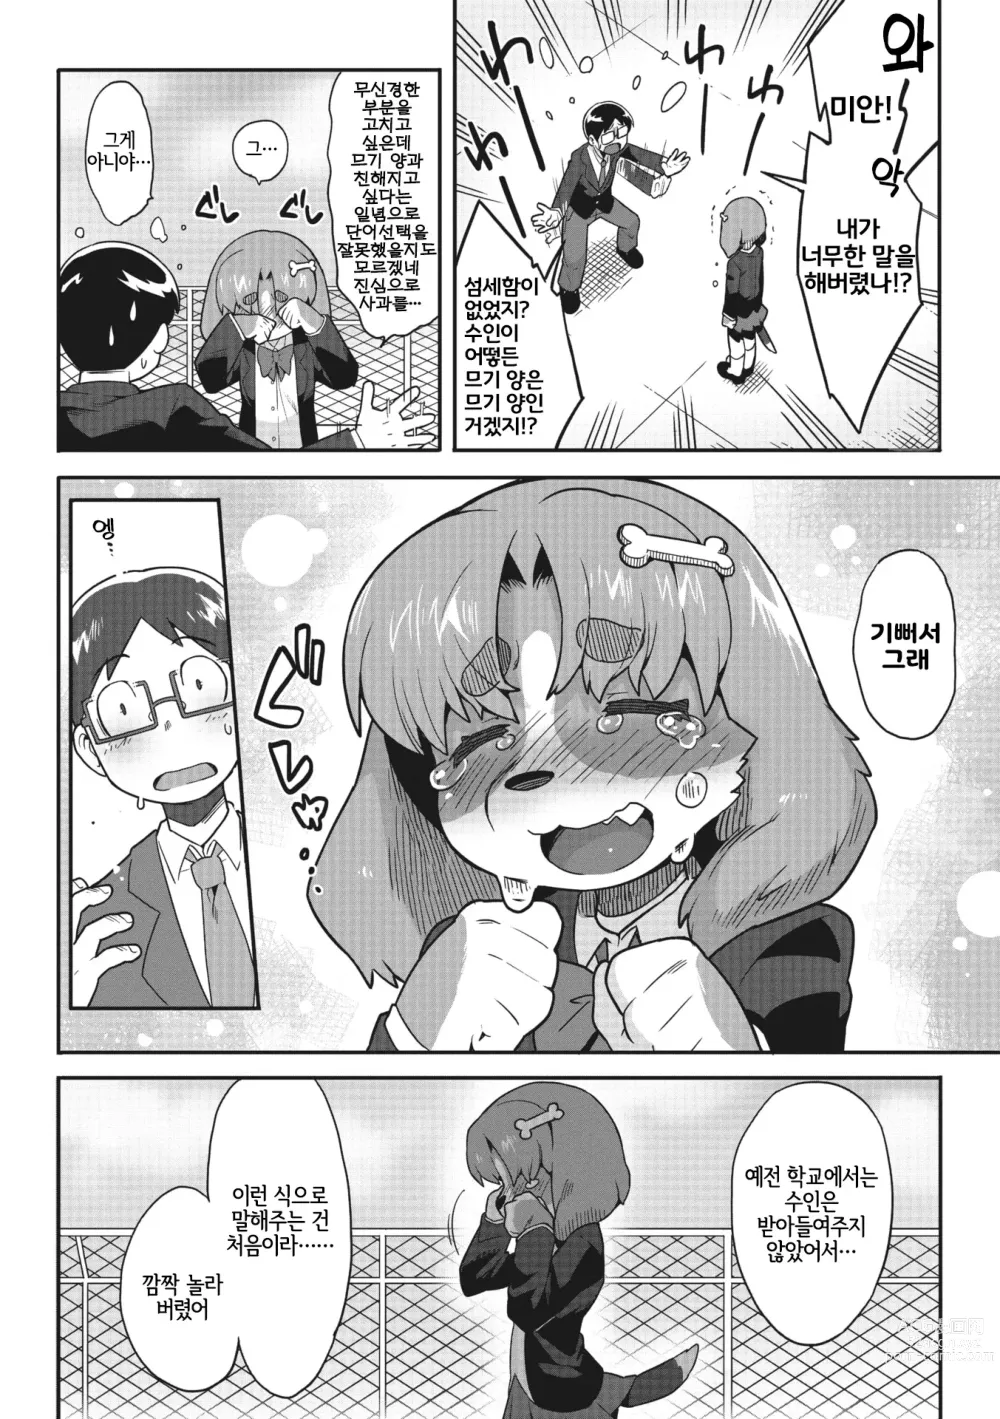 Page 6 of manga  주인님!!